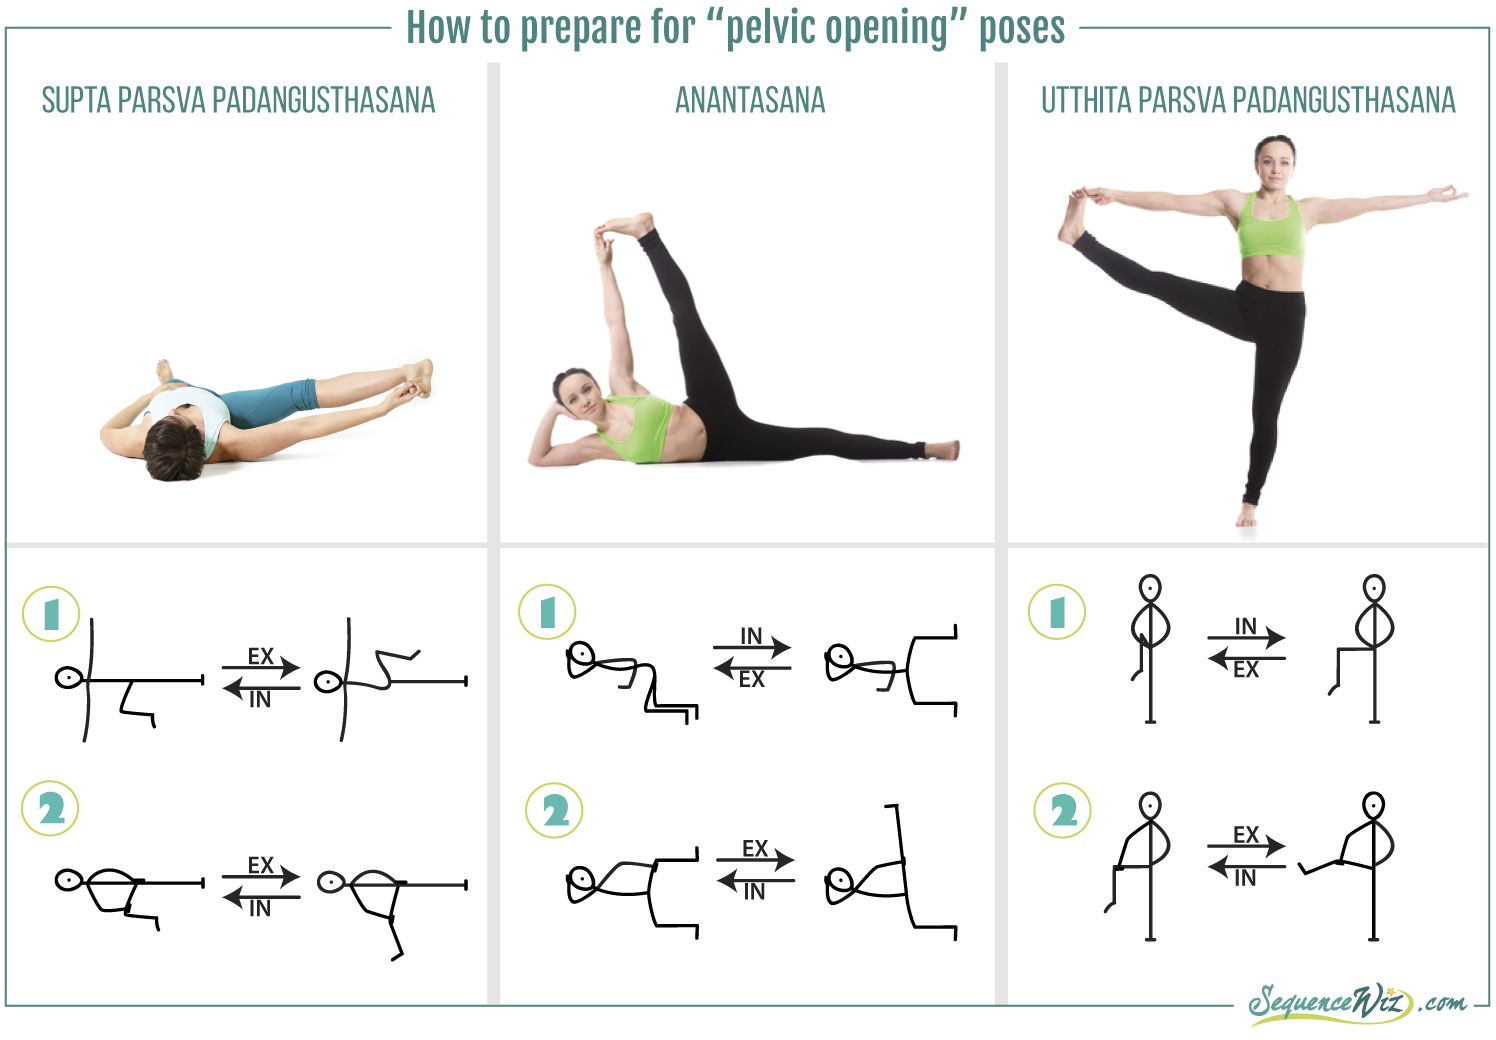 5 Postnatal Yoga Poses to Improve Pelvic Stability - Yoga Journal